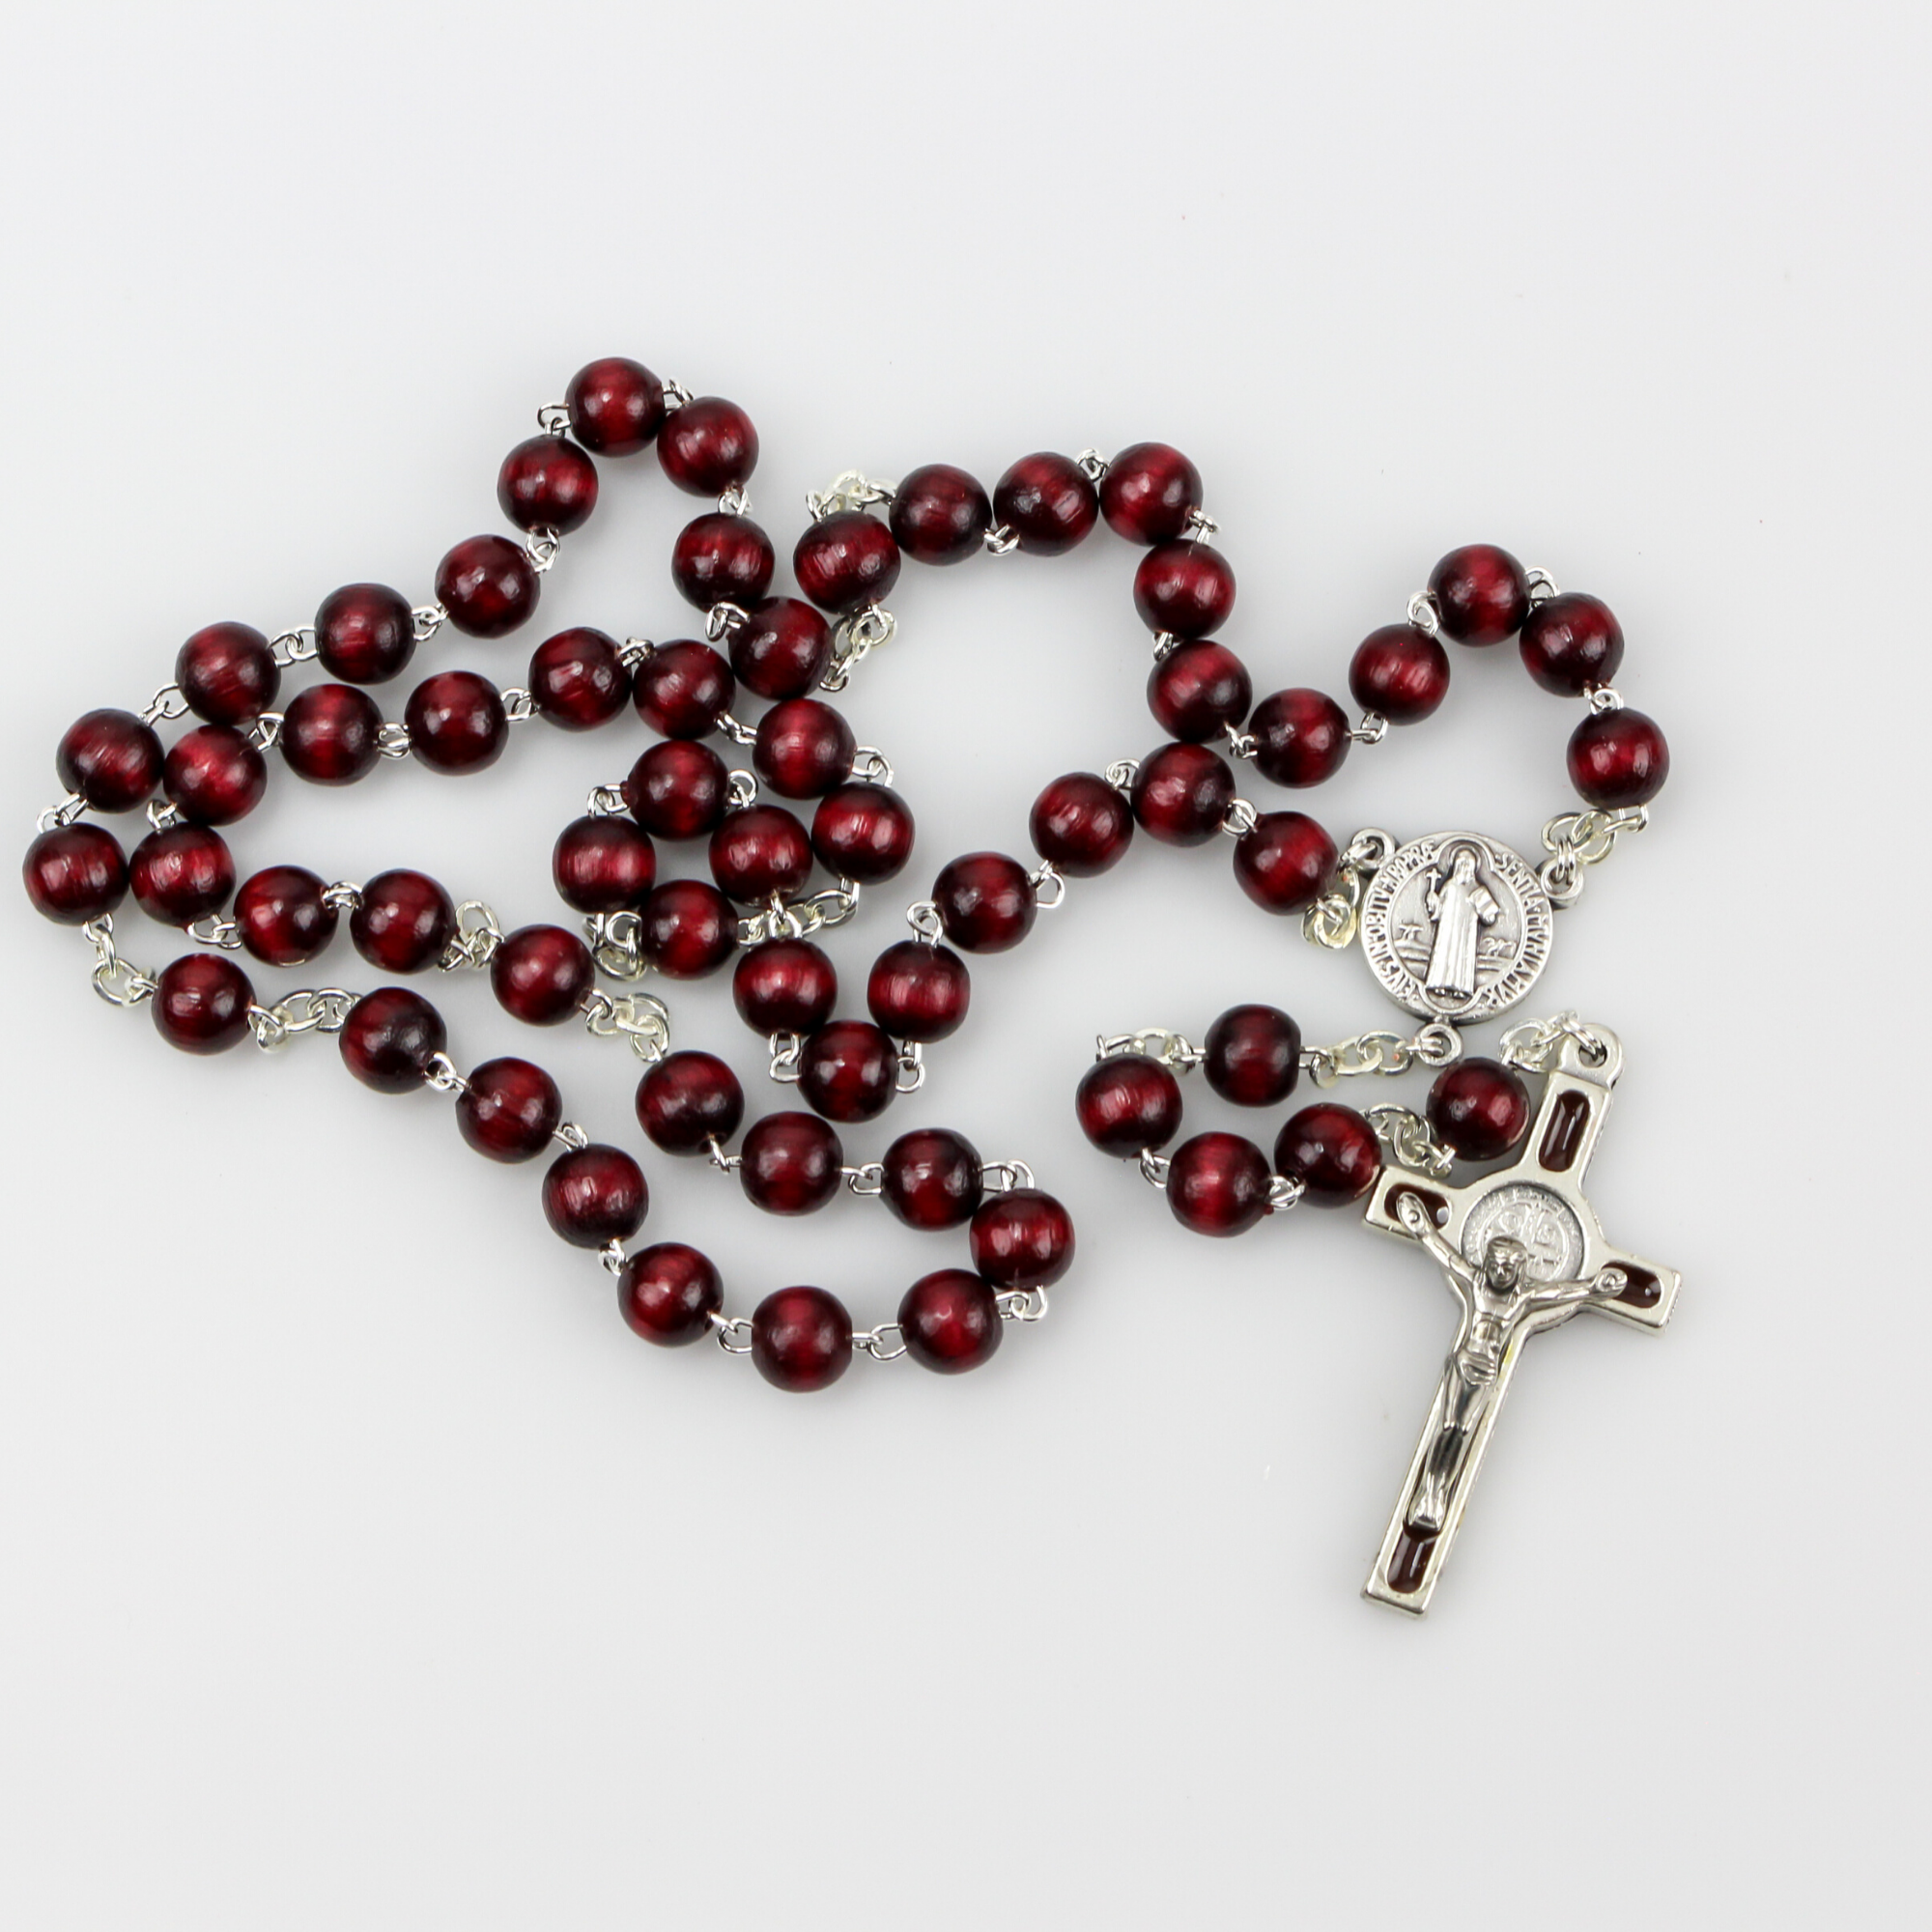 Saint Benedict rosary 6mm wooden beads, handmade in Italy